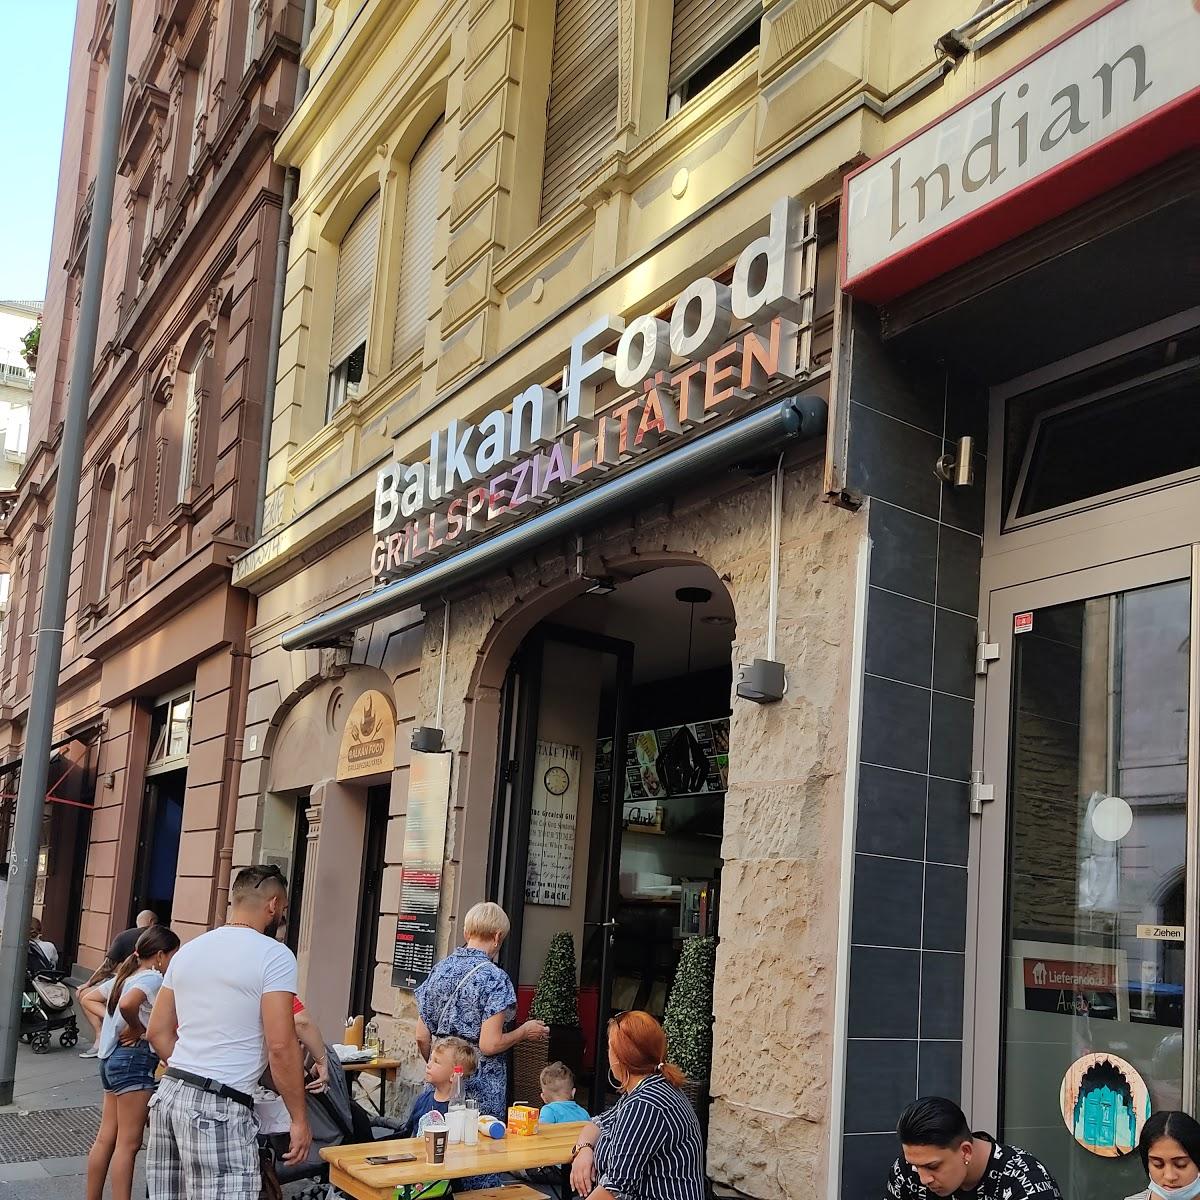 Restaurant "Balkan Food" in Frankfurt am Main